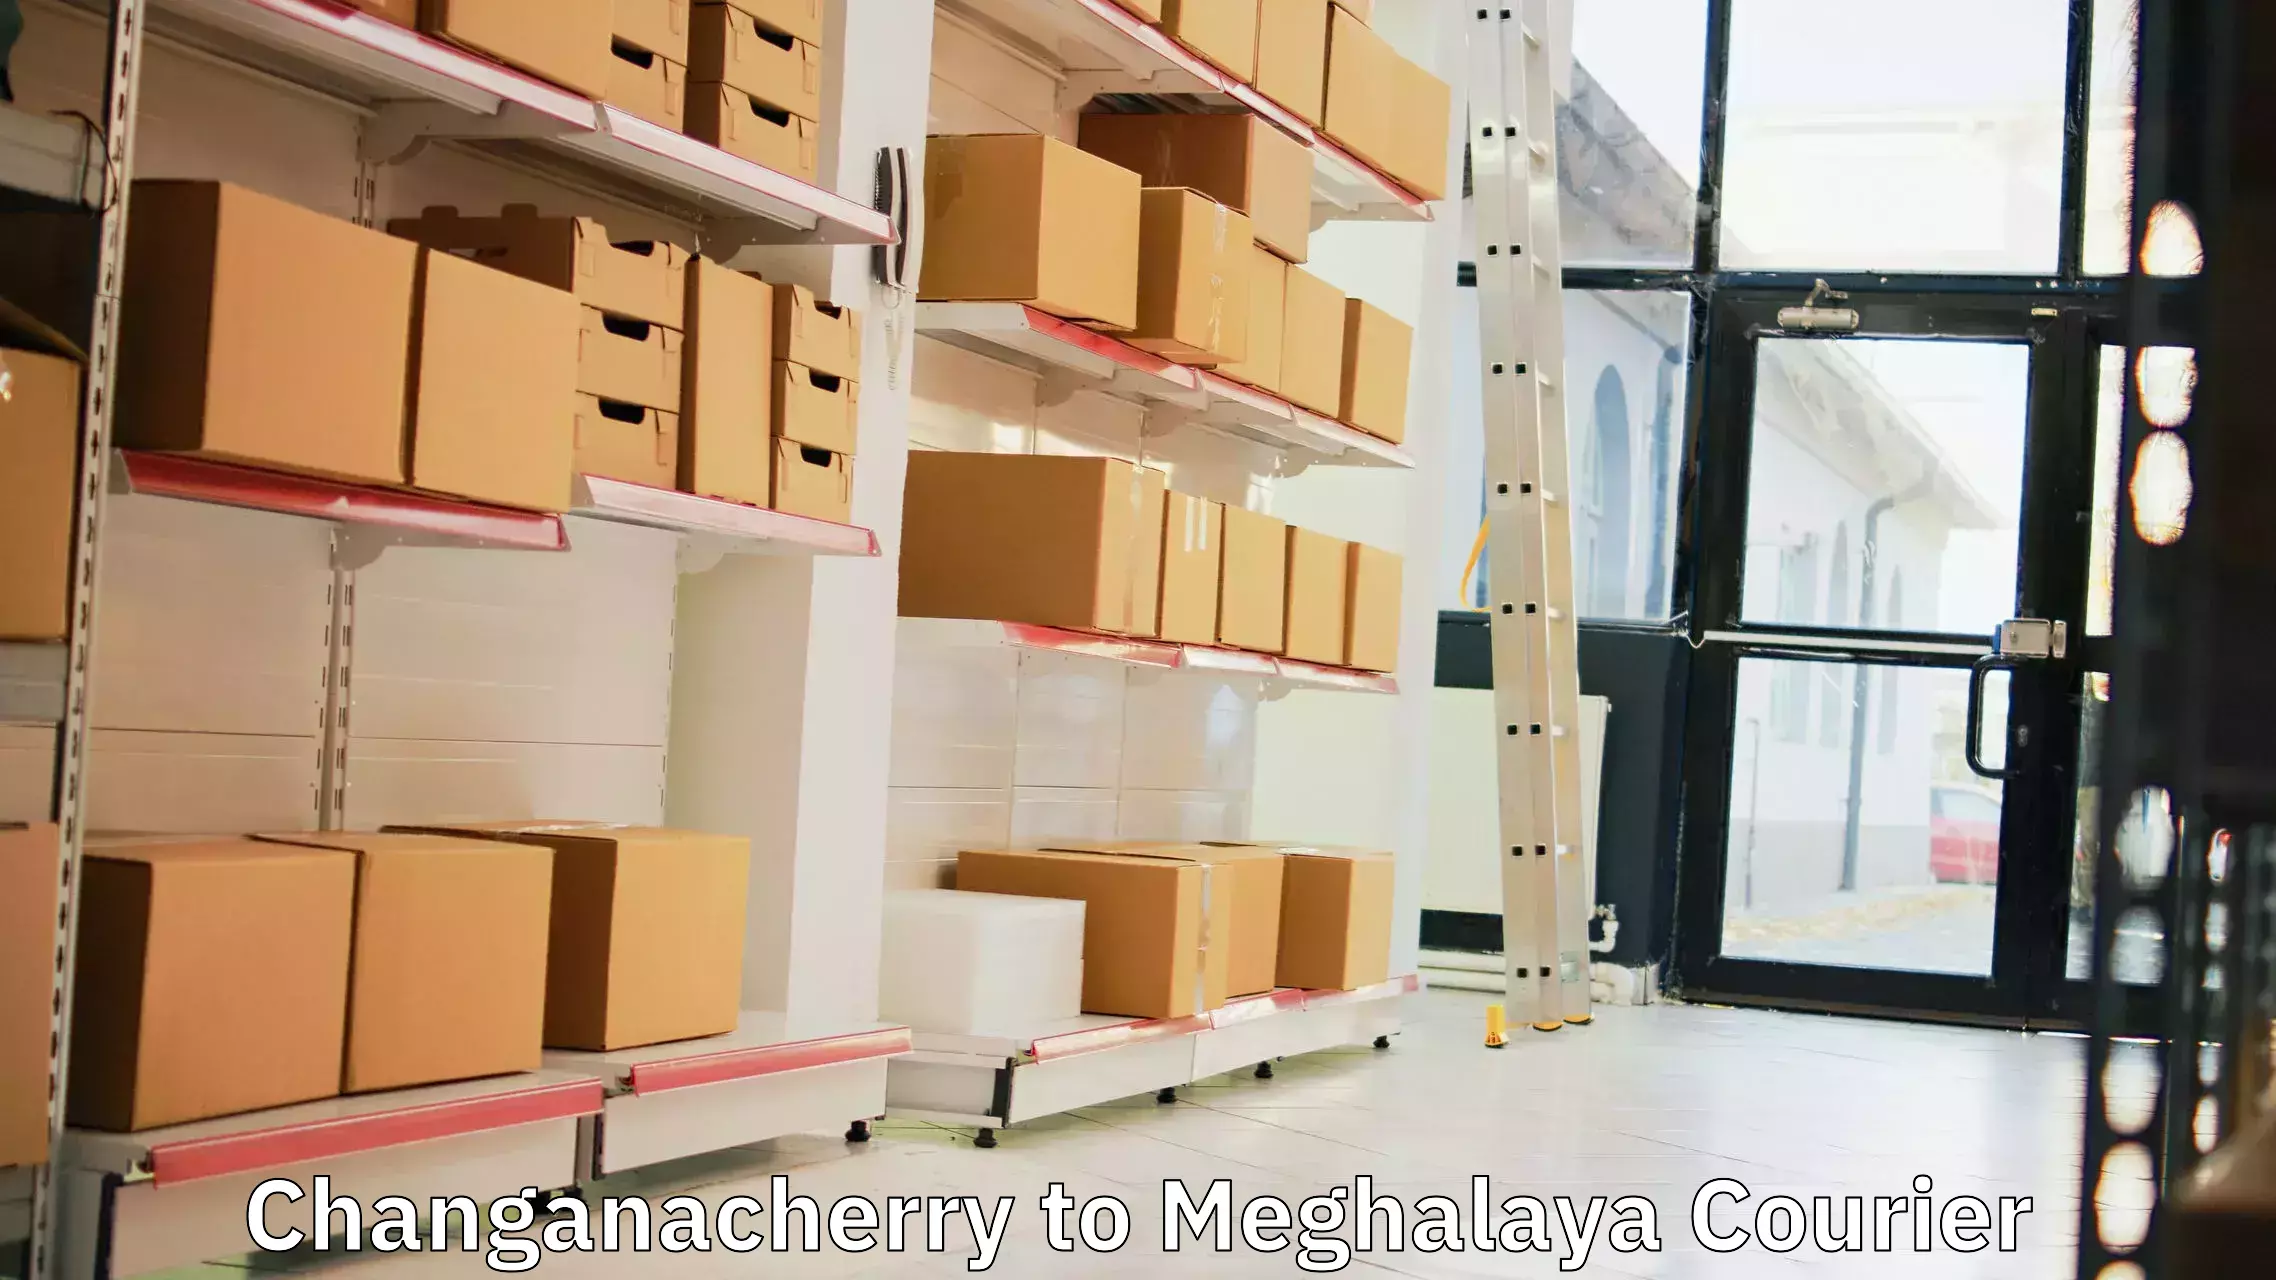 International parcel service Changanacherry to Meghalaya